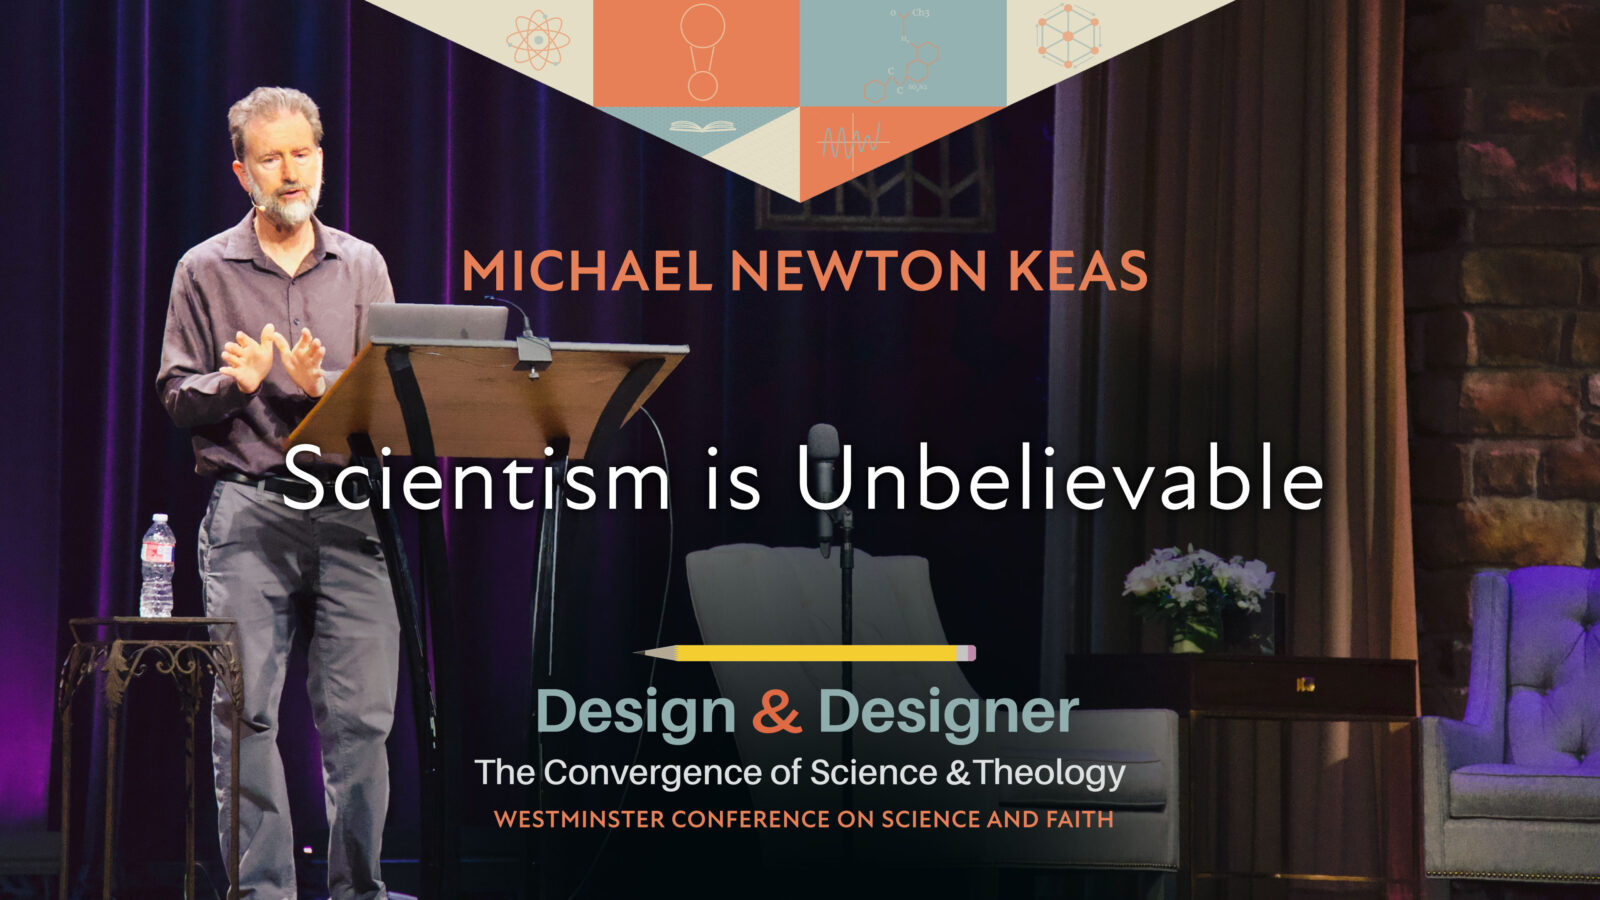 Scientism is Unbelievable by Michael Newton Keas